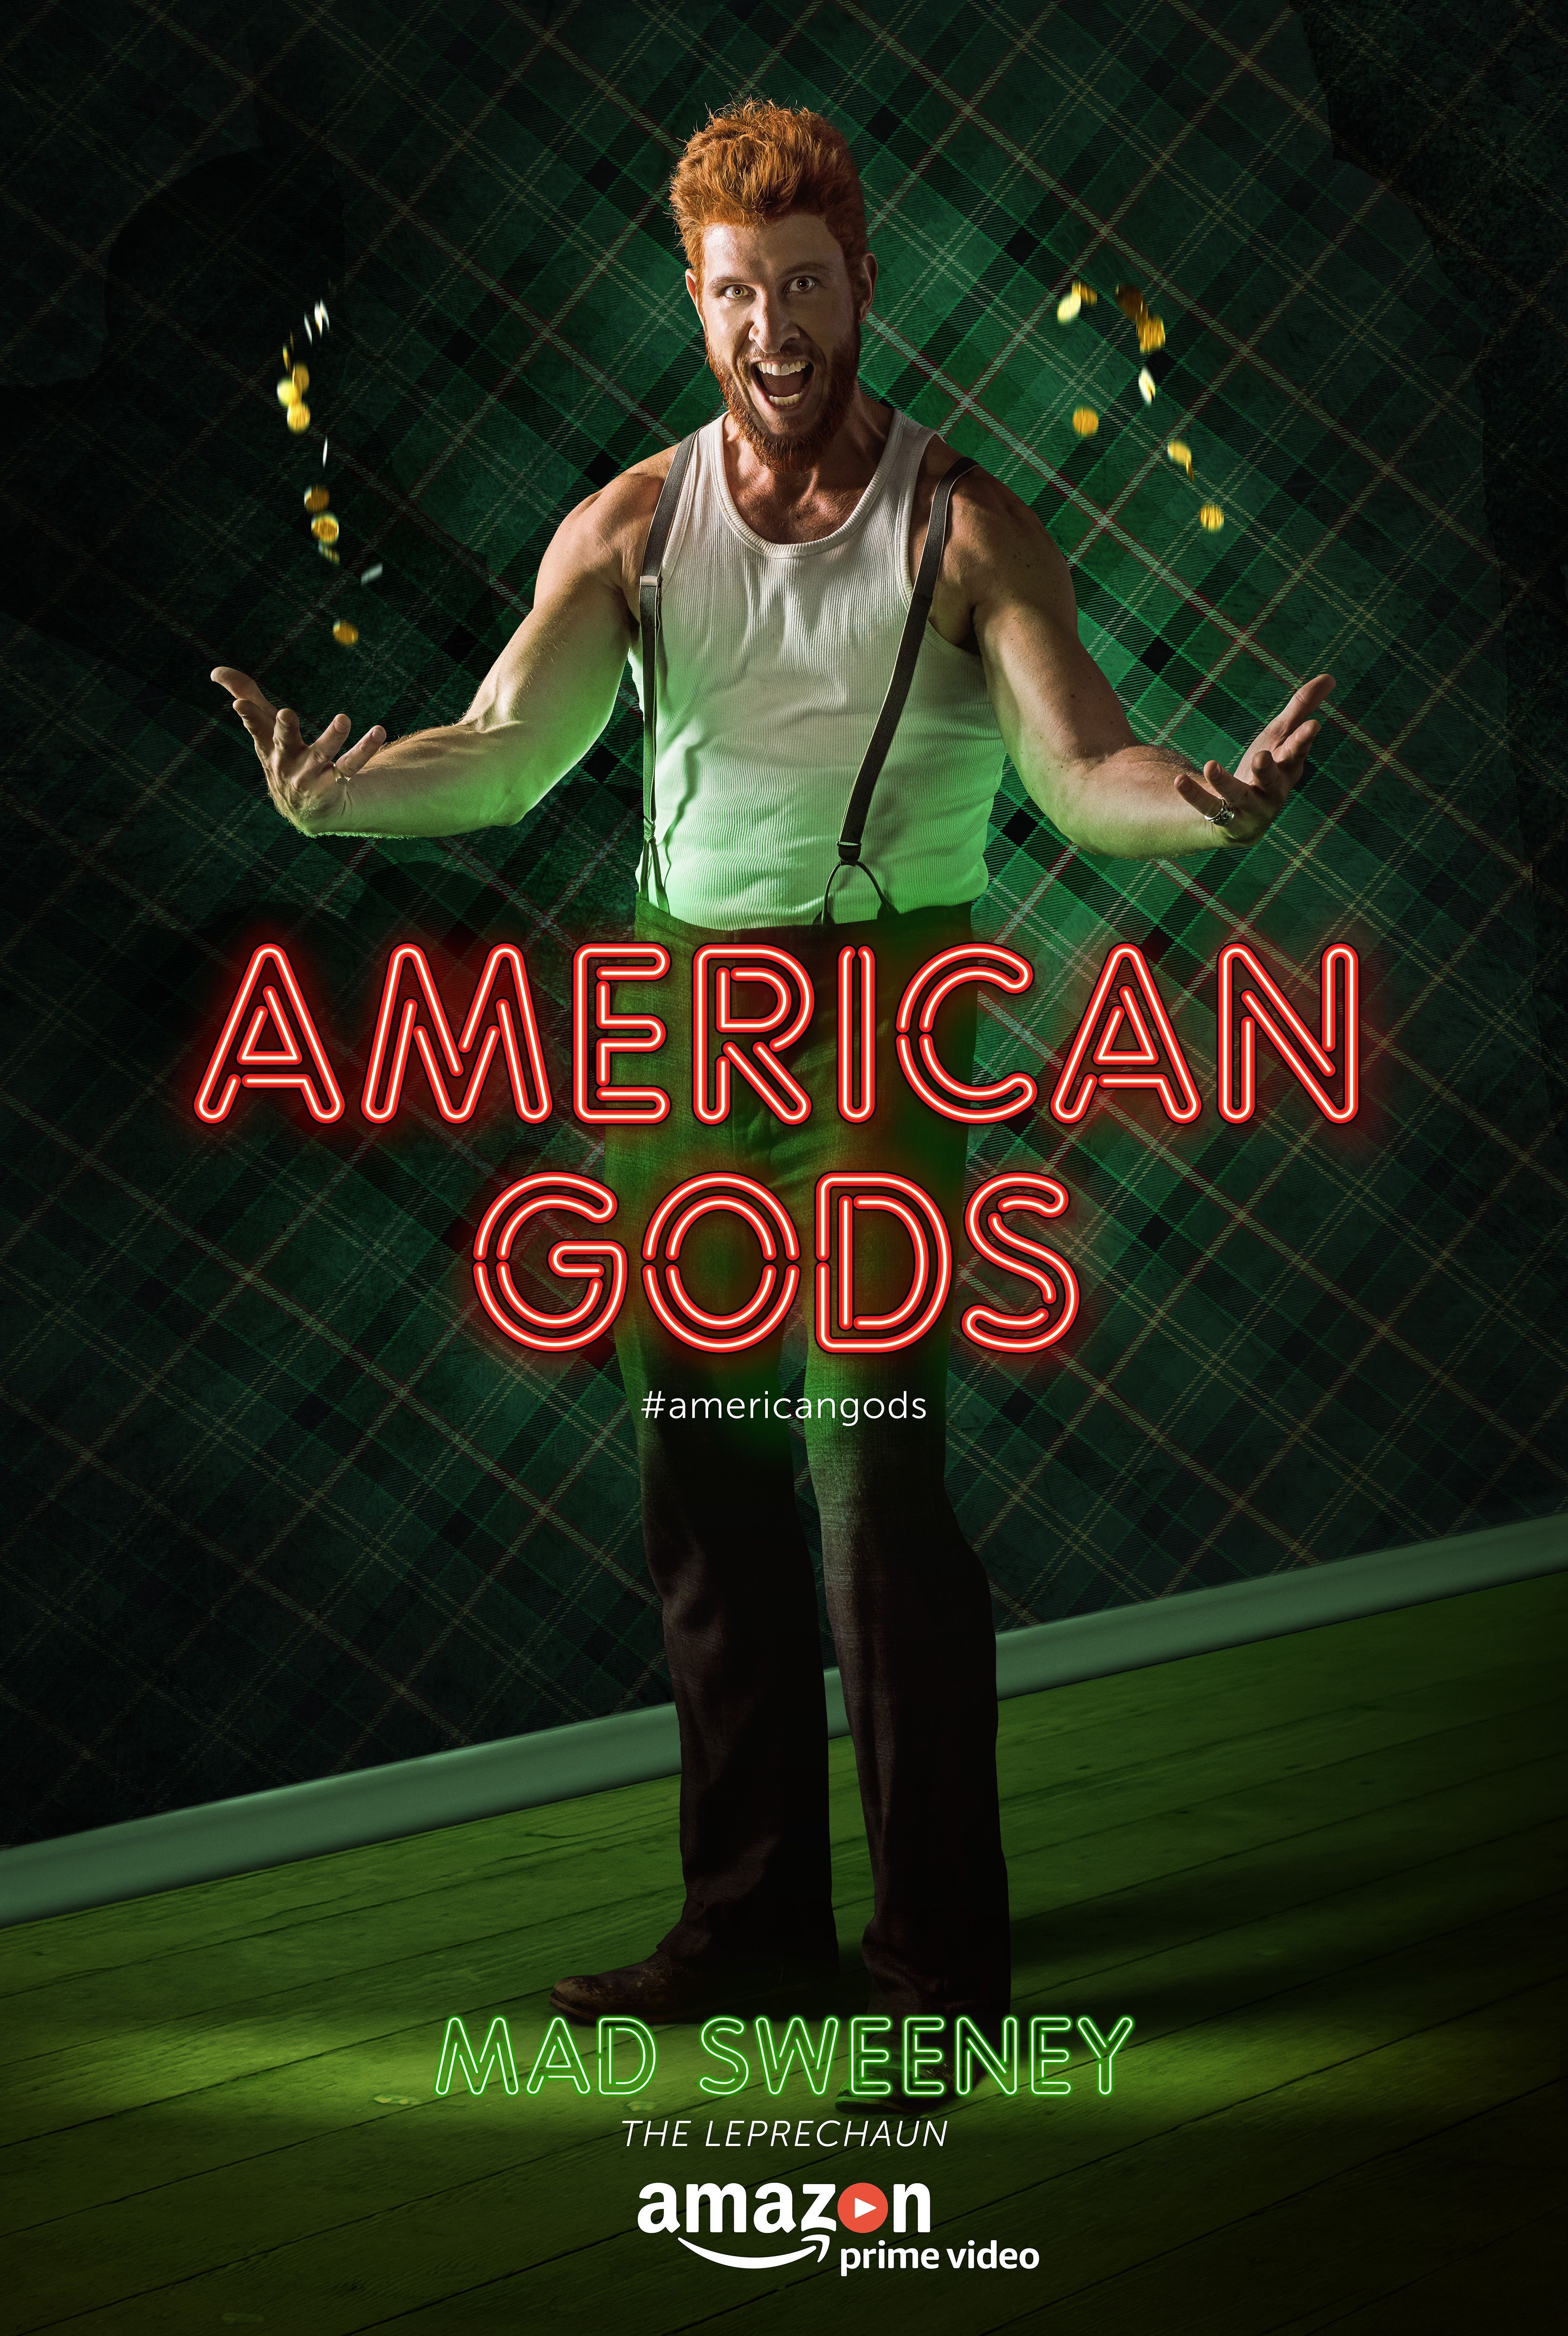 American Gods Movie Poster